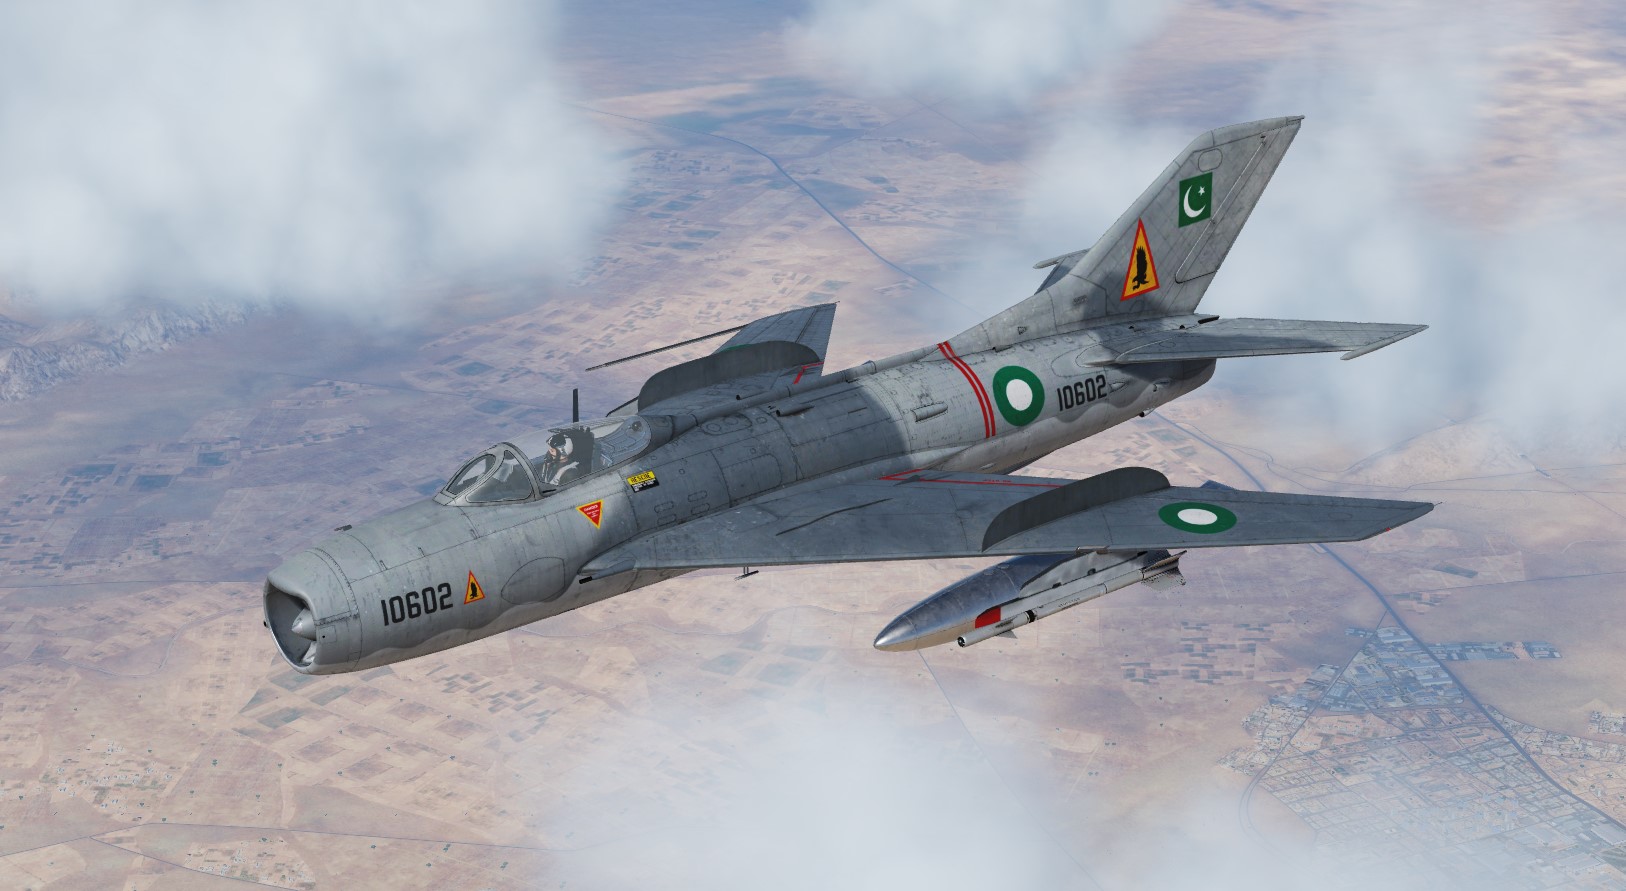 MiG-19/Shenyang F-6 Pakistan Air Force 25 Squadron "Eagles"